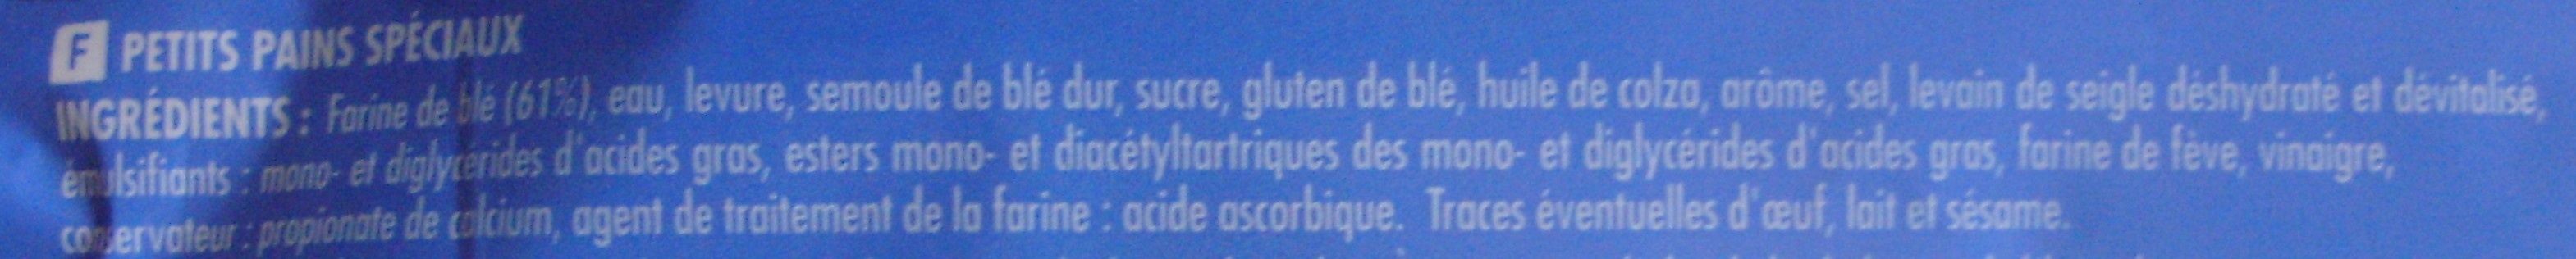 Muffins nature - Ingredients - fr